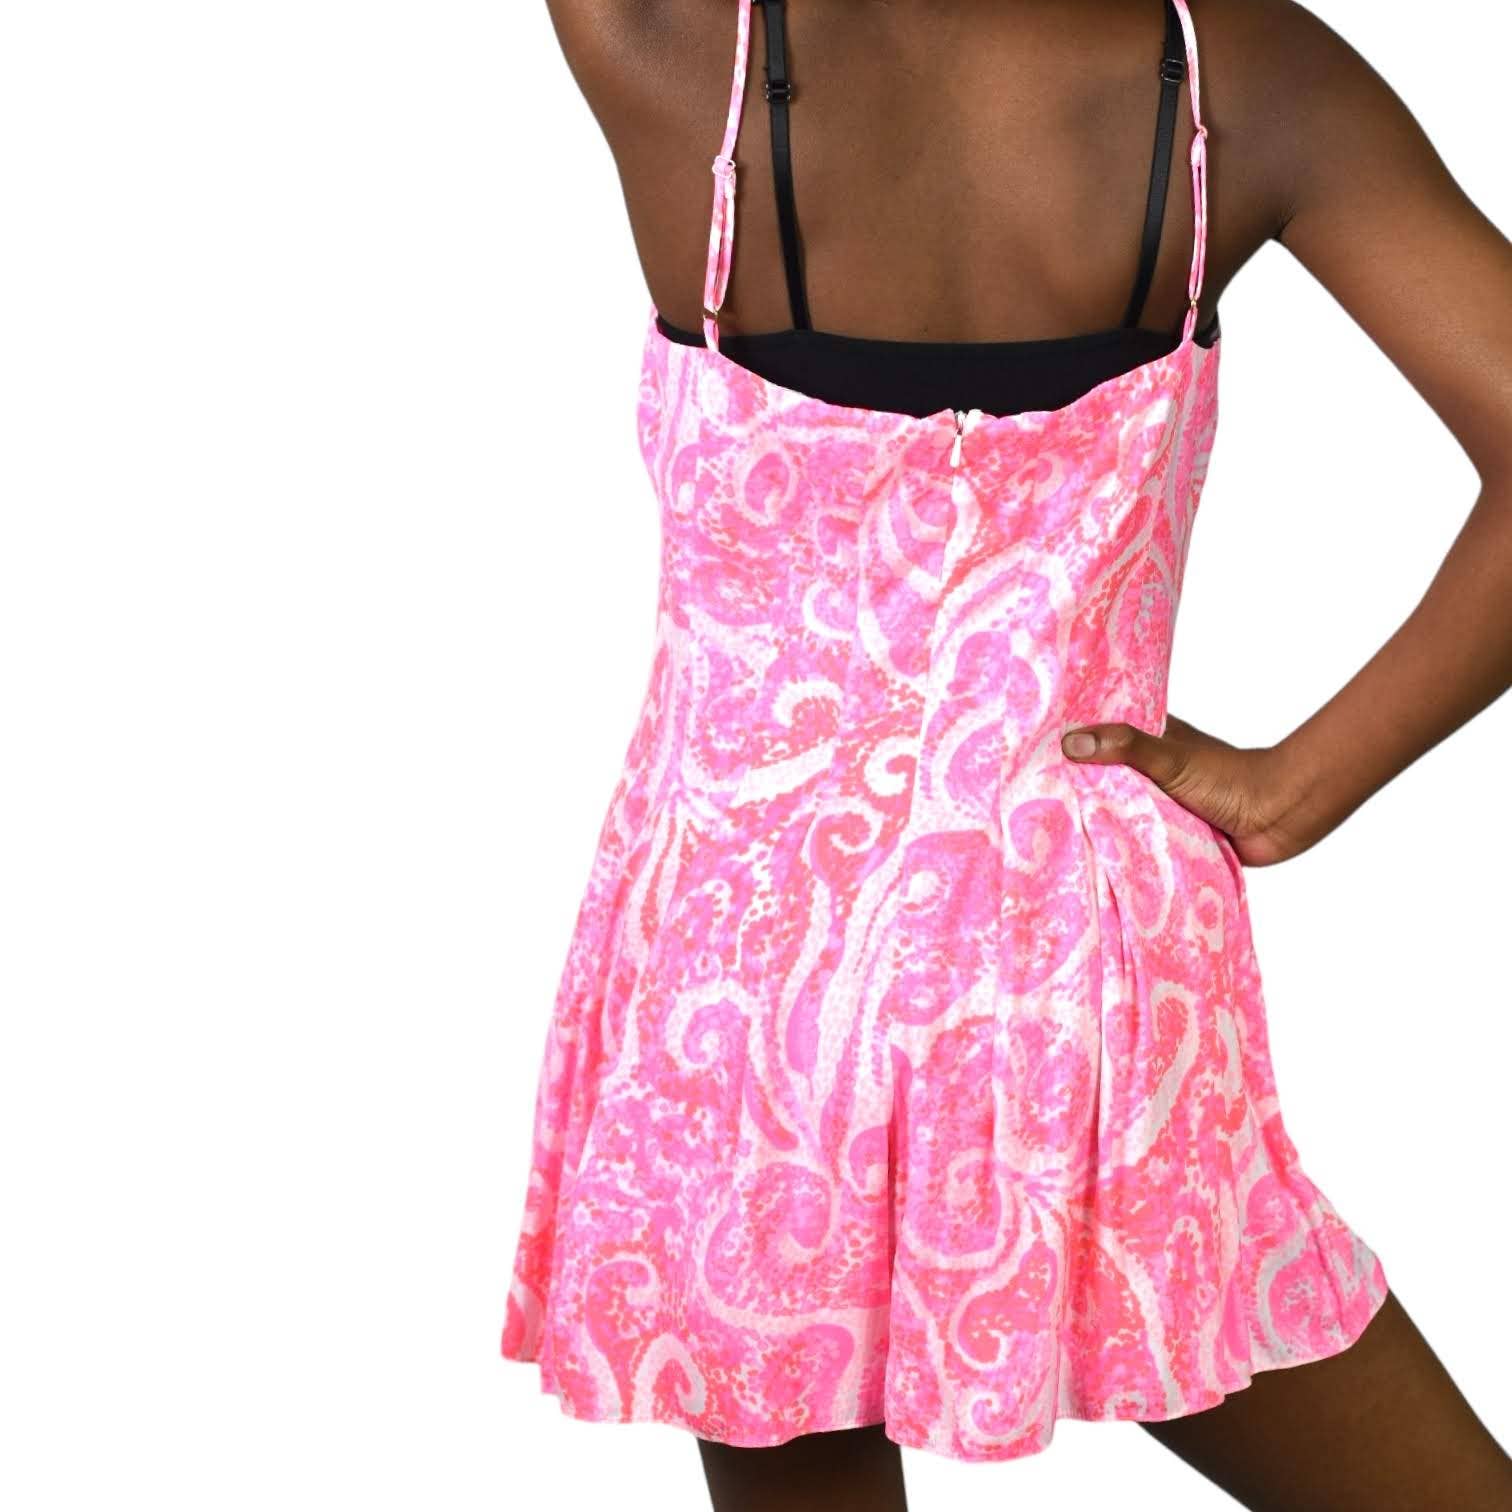 Lilly Pulitzer Kyla Romper Bright Pink Pout Mini Dress Playsuit Shorts Size 0